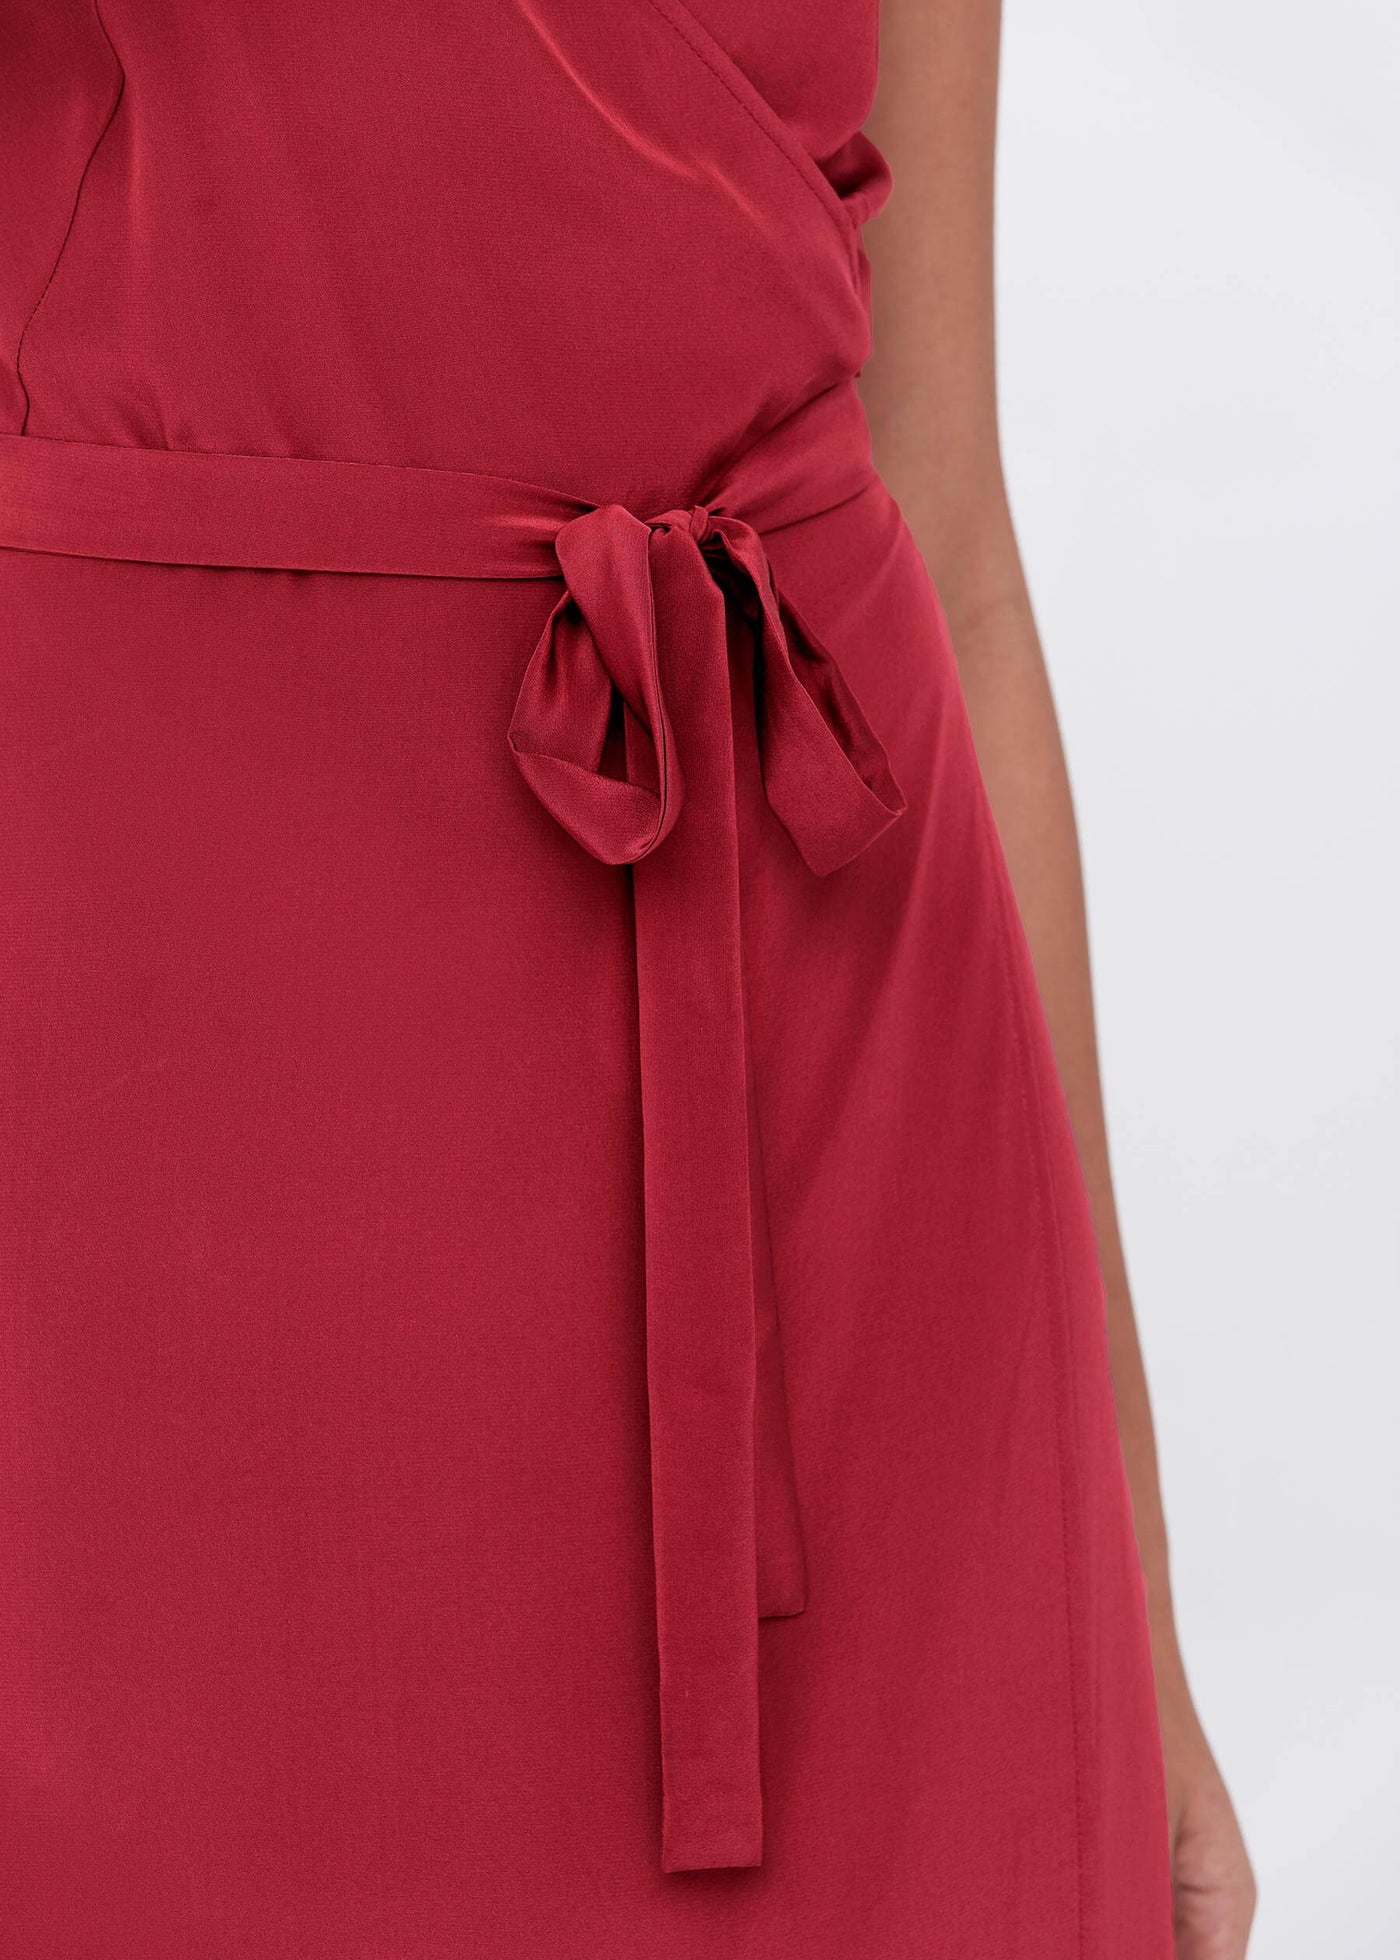 Sexy Fashion Silk Camisole Wrap Dress Cardinal